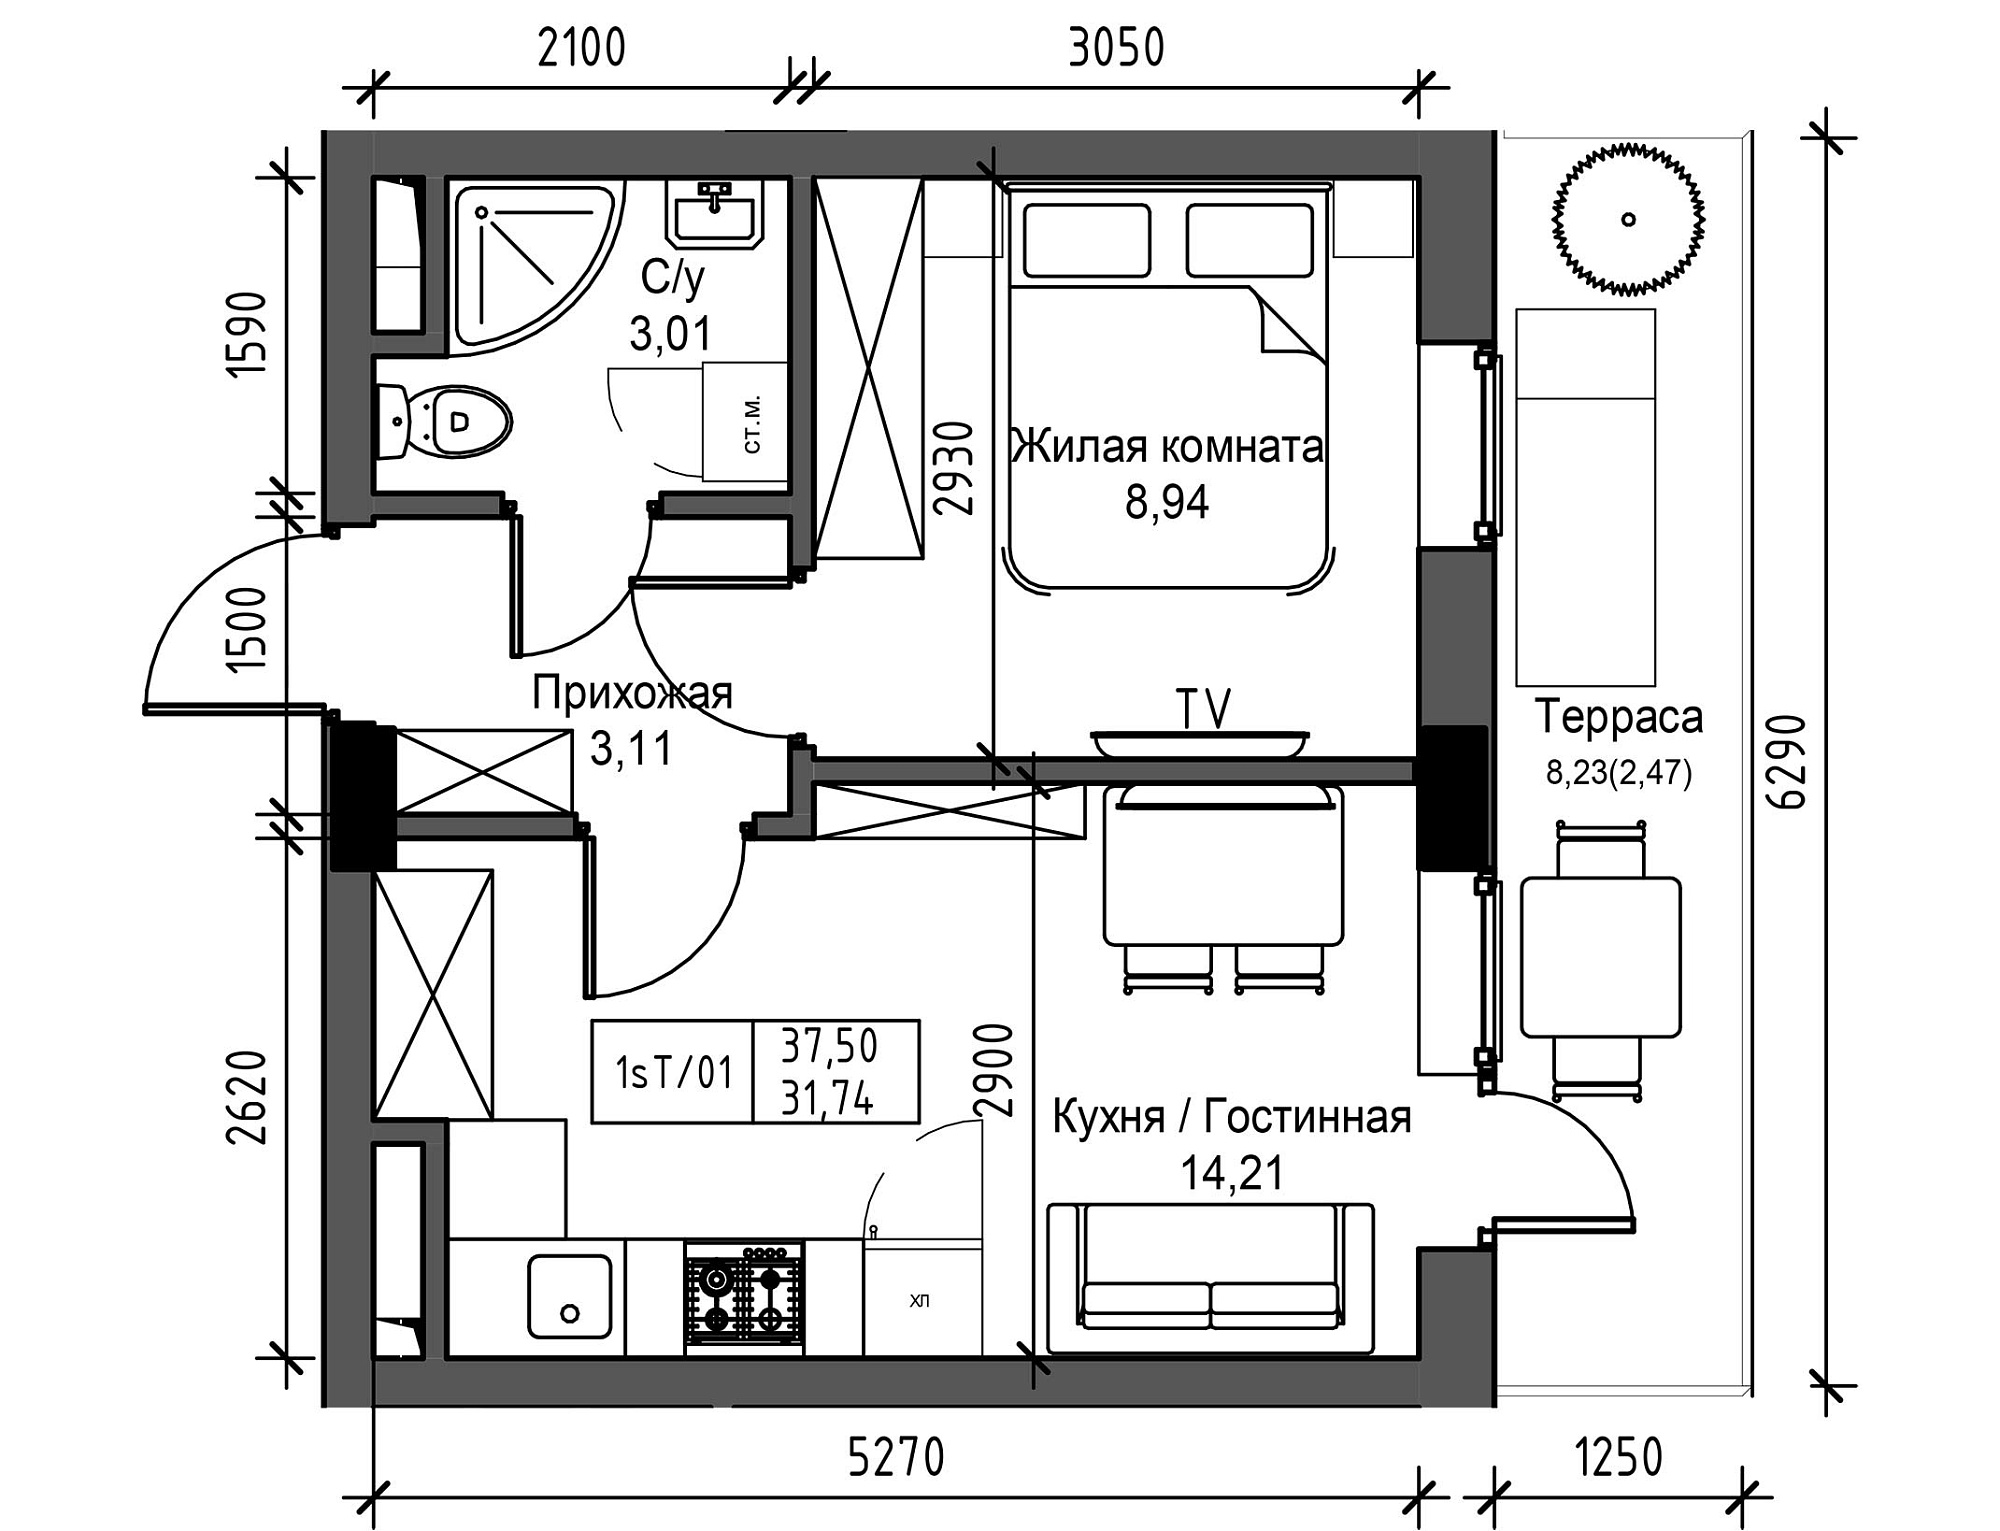 Планування 1-к квартира площею 31.74м2, UM-003-05/0039.